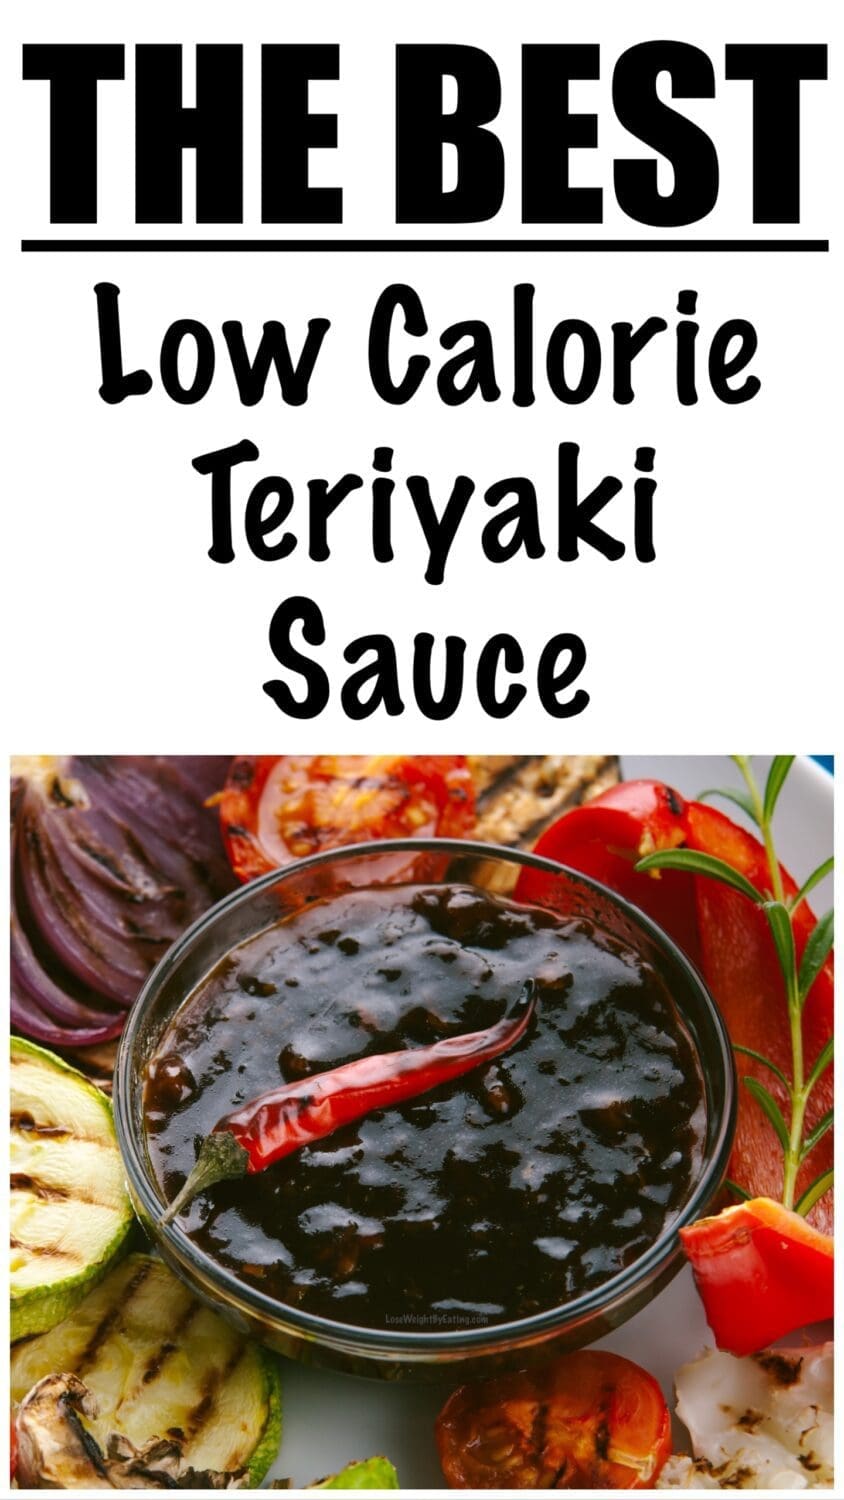 Low Calorie Teriyaki Sauce